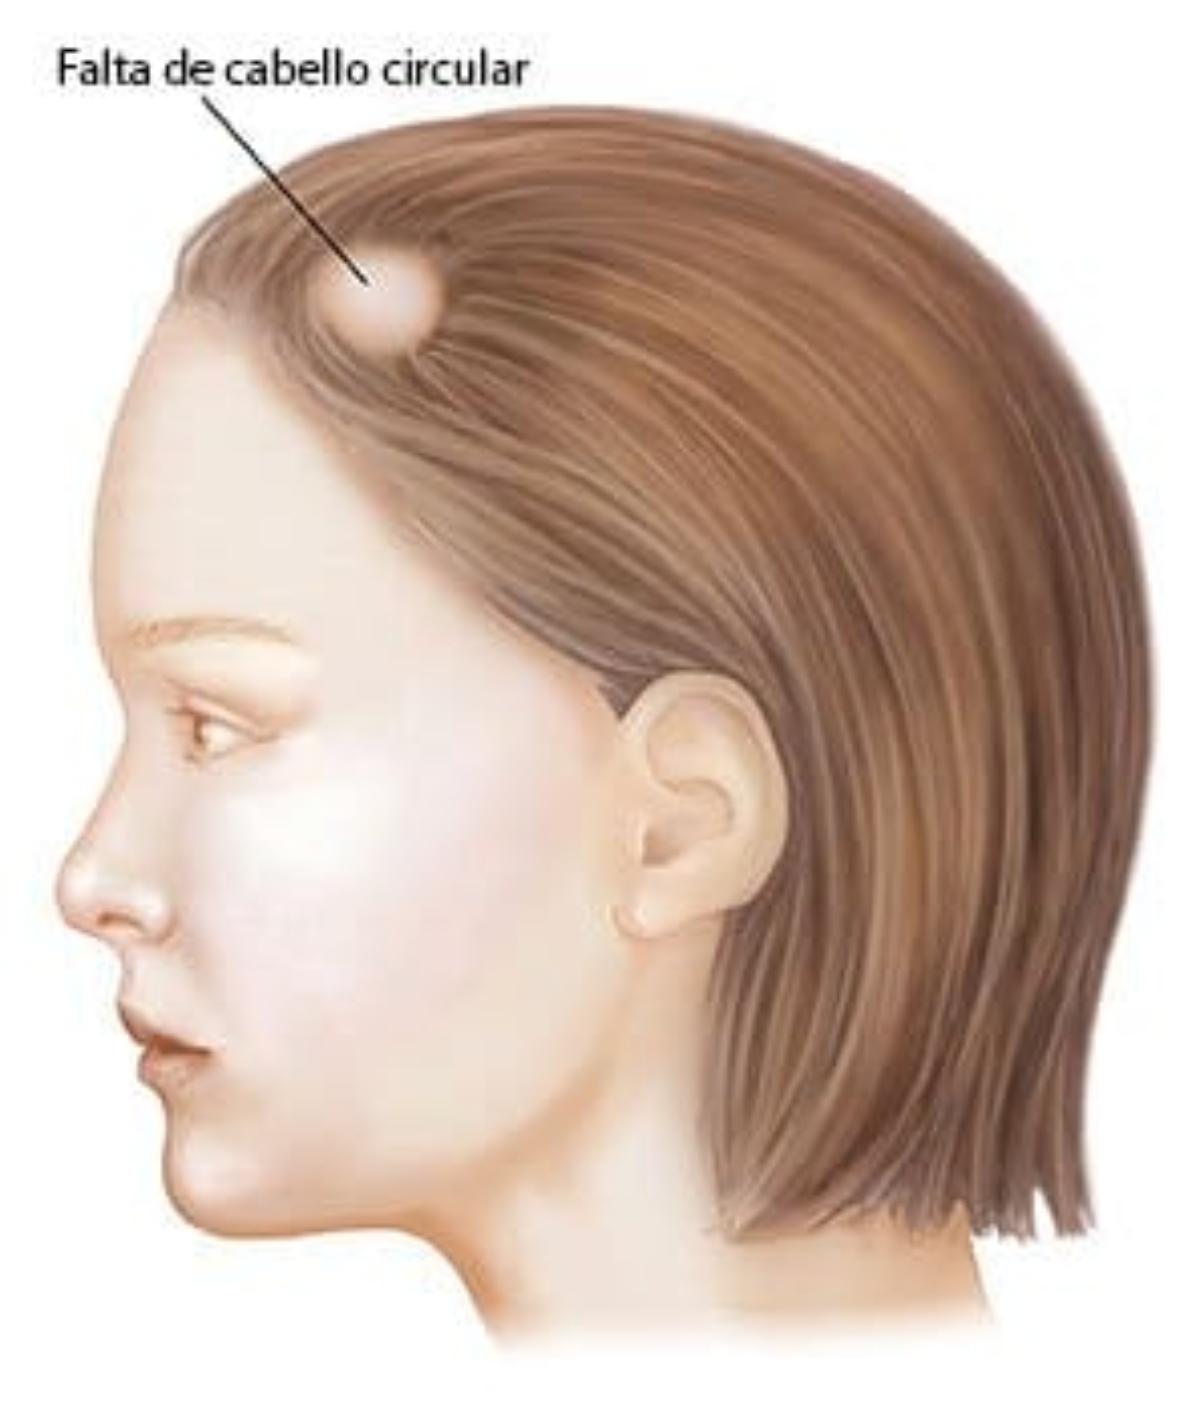 Alopecia Areata: Causas, tratamiento mujeres - Face Clinic